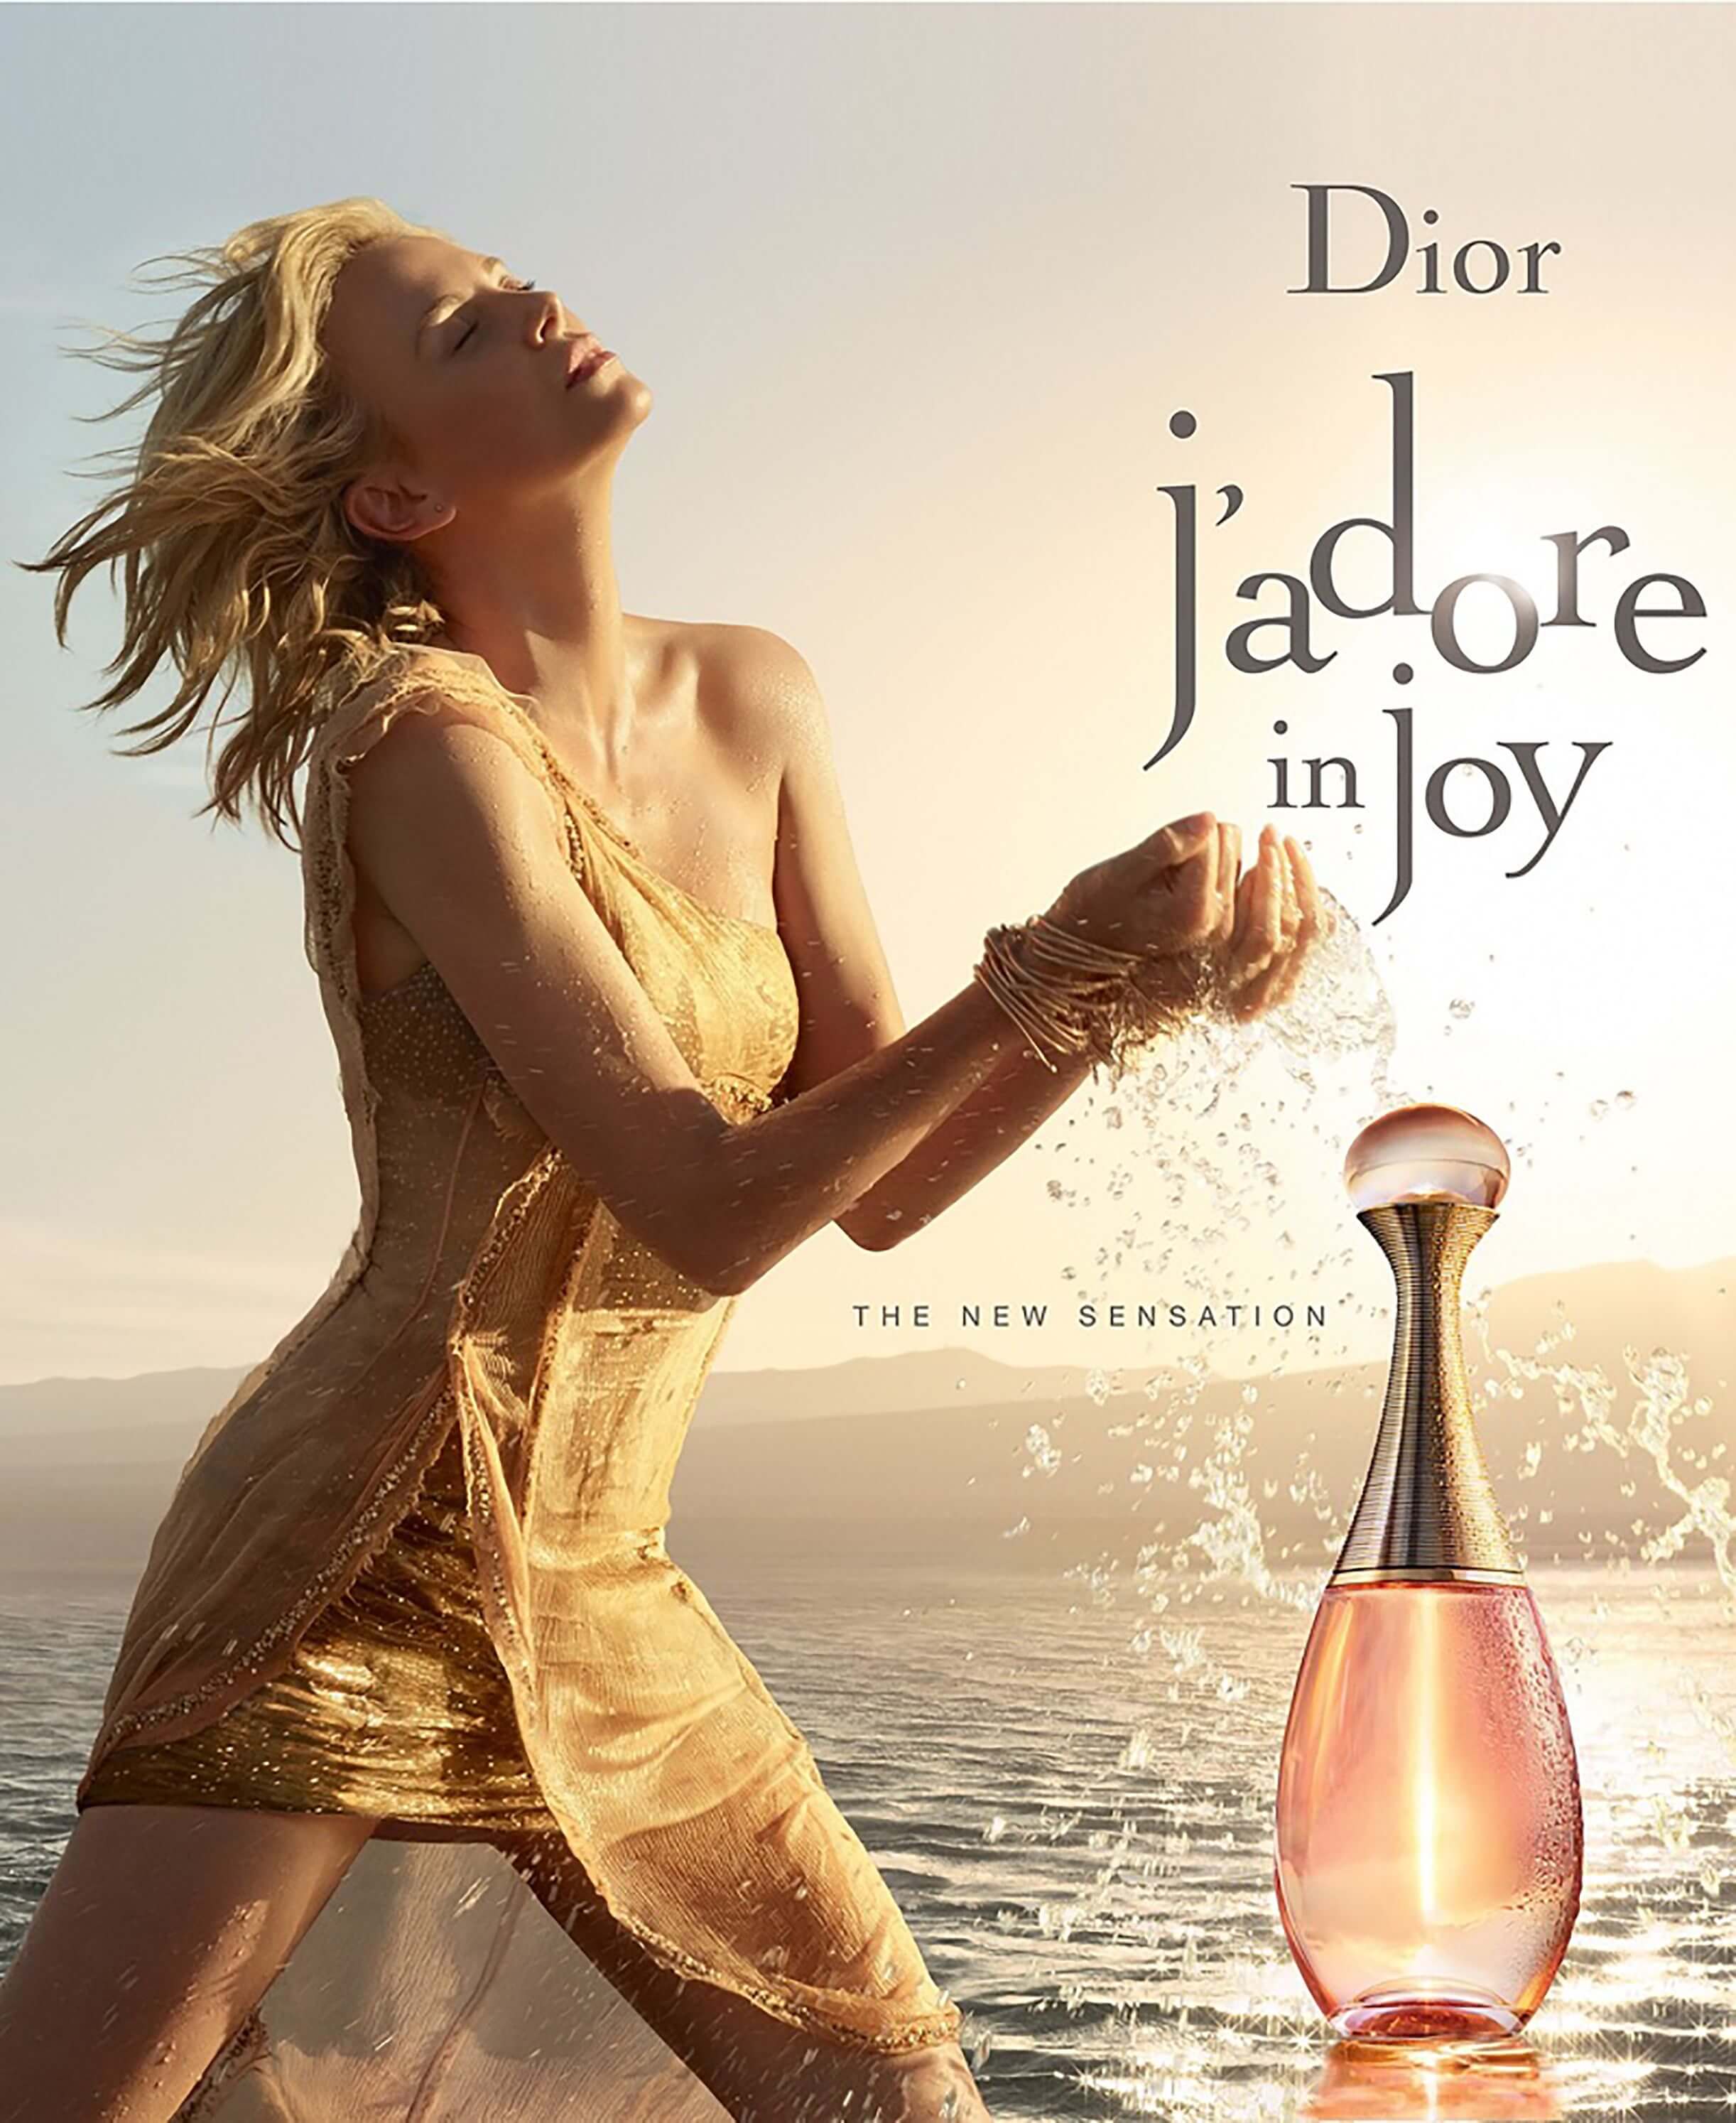 Dior Jadore In Joy EDT J'adore In Joy กลิ่นแห่งความสุขสนุกสนานที่จะทำให้คุณกระโดดโลดเต้นอยู่ในห้วงแห่งความสุขที่เต็มเปี่ยมไปด้วยความรักที่เต็มหัวใจ! ฟรองซัวส์ เดอมาชี ผู้สร้างสรรค์น้ำหอมให้กับ Dior ได้สร้างสรรค์ผลงานชิ้นนี้ออกมาได้อย่างแยบยลและคมคาย ในขณะเดียวกันก็มีความคลาสสิคและน่าตื่นตาตื่นใจ… 